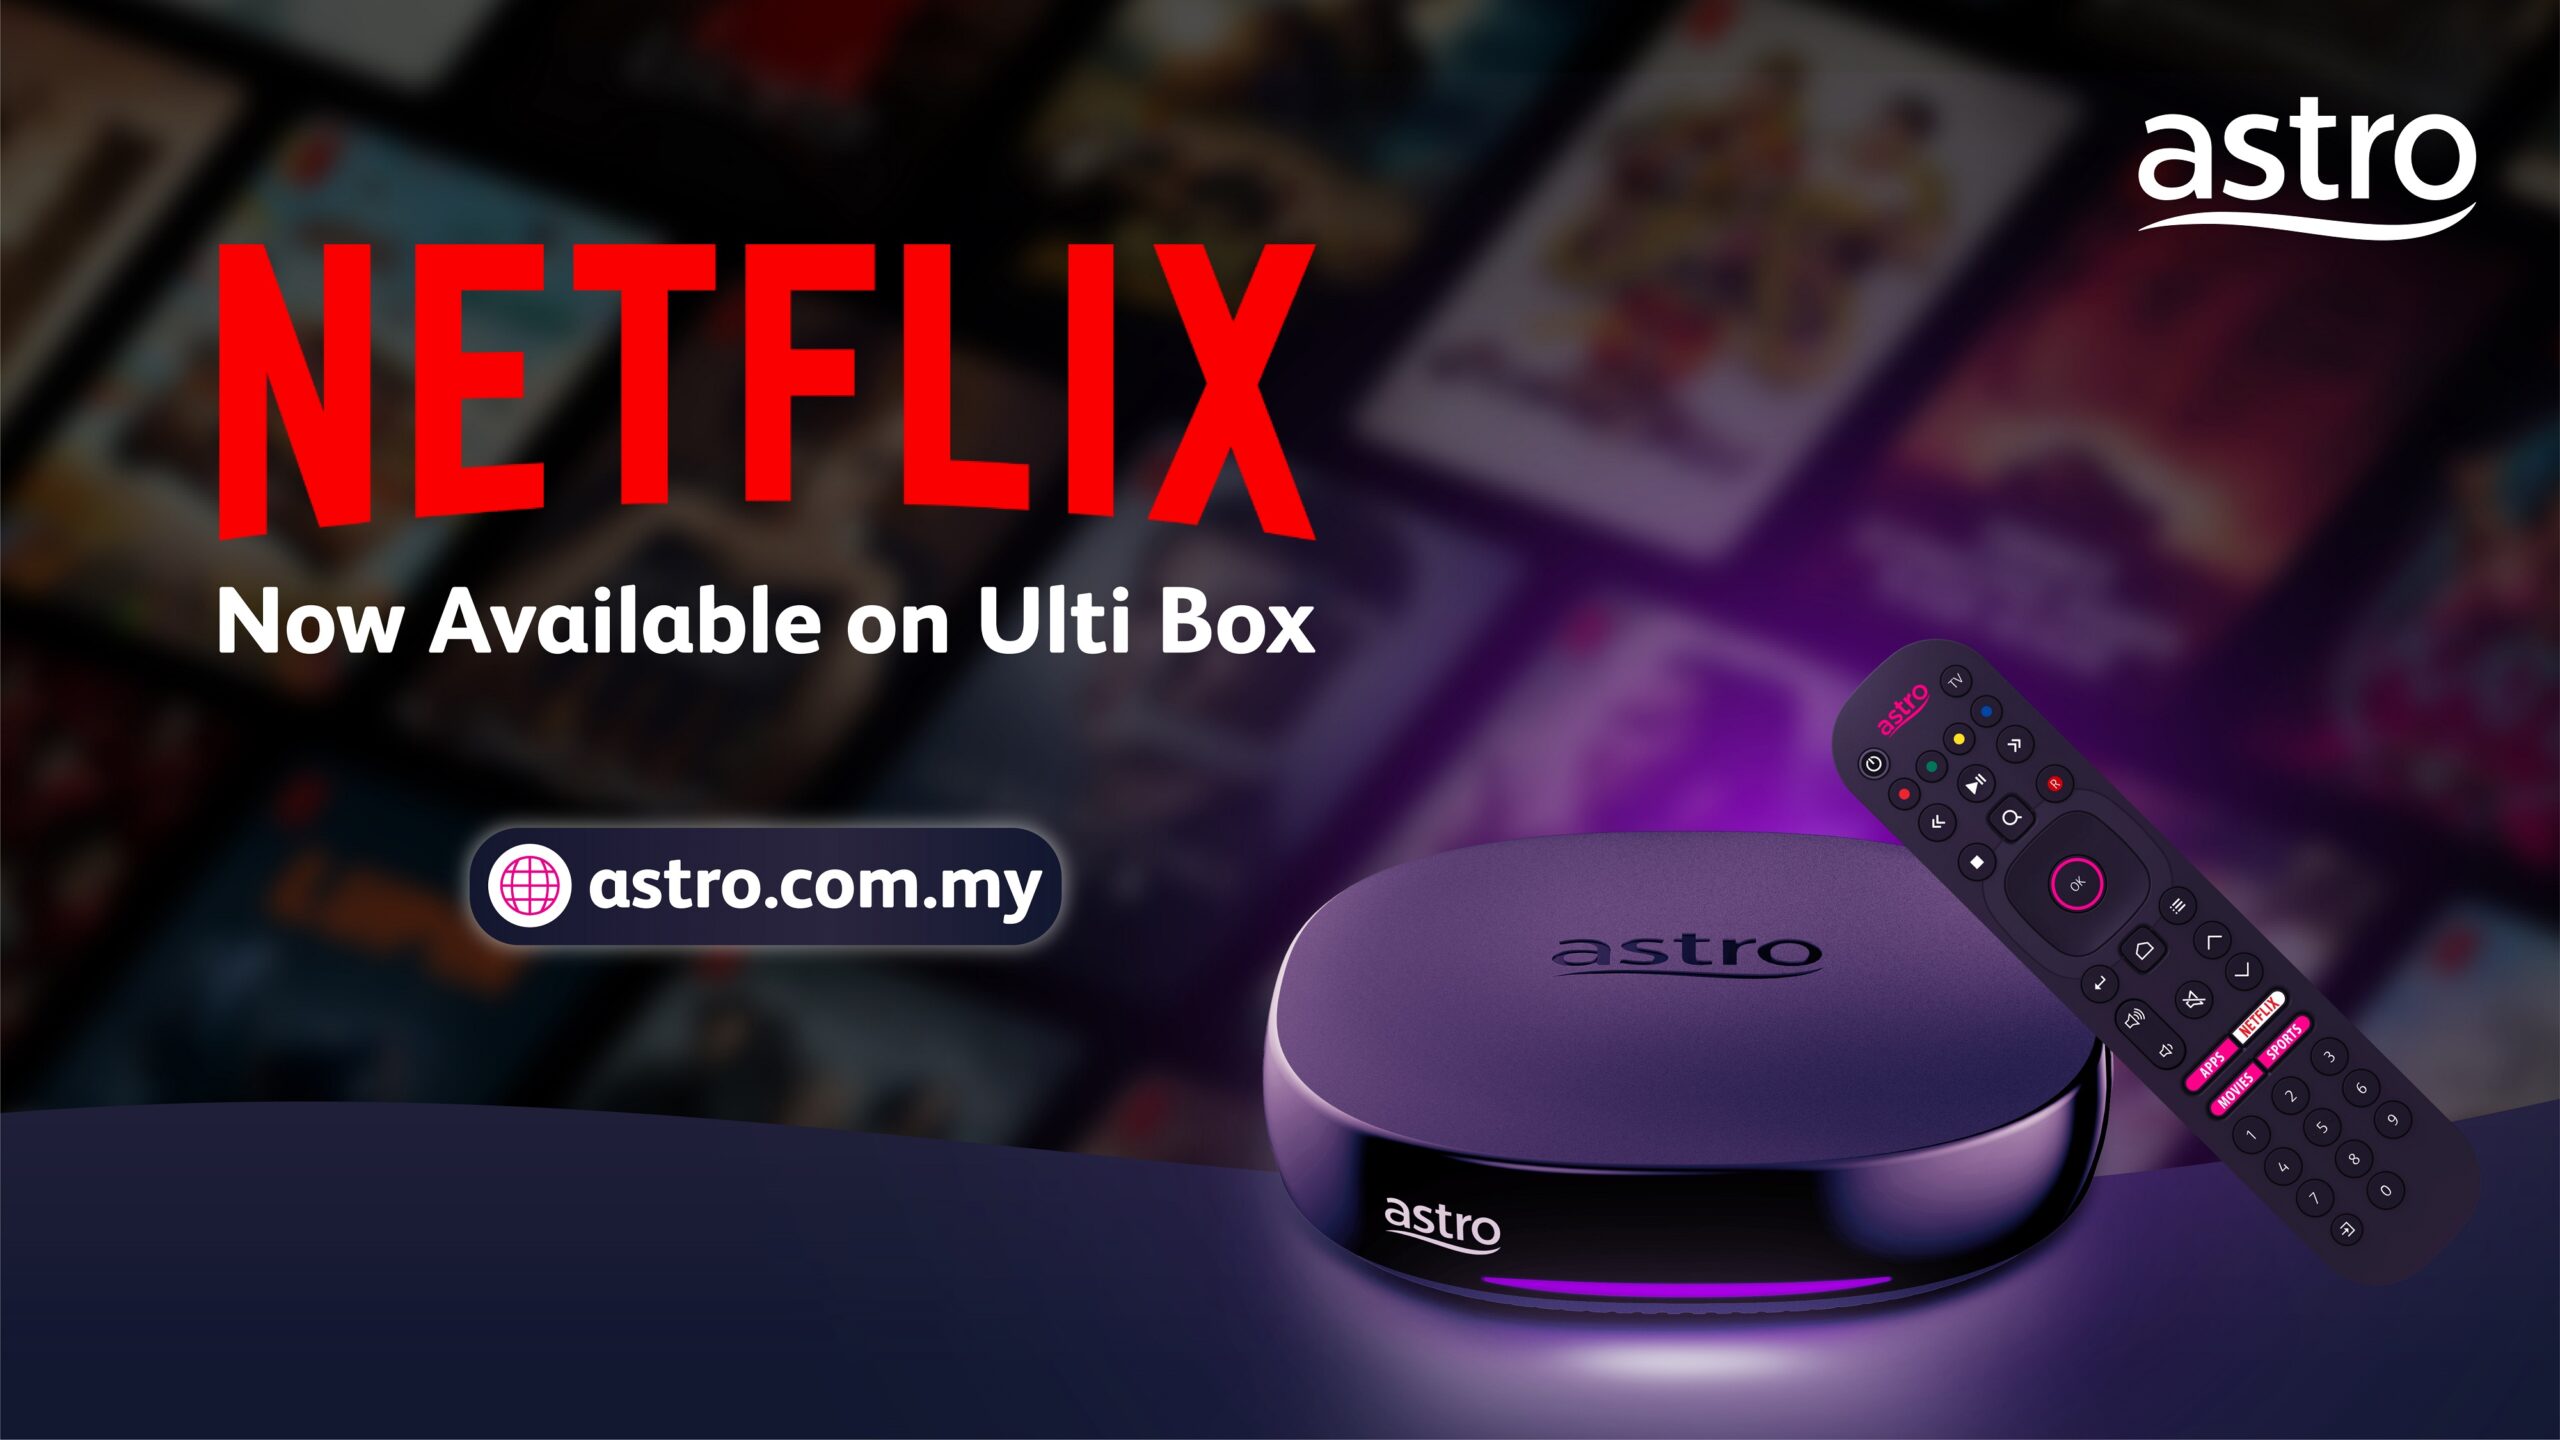 Astro Ulti Box now streams Netflix scaled